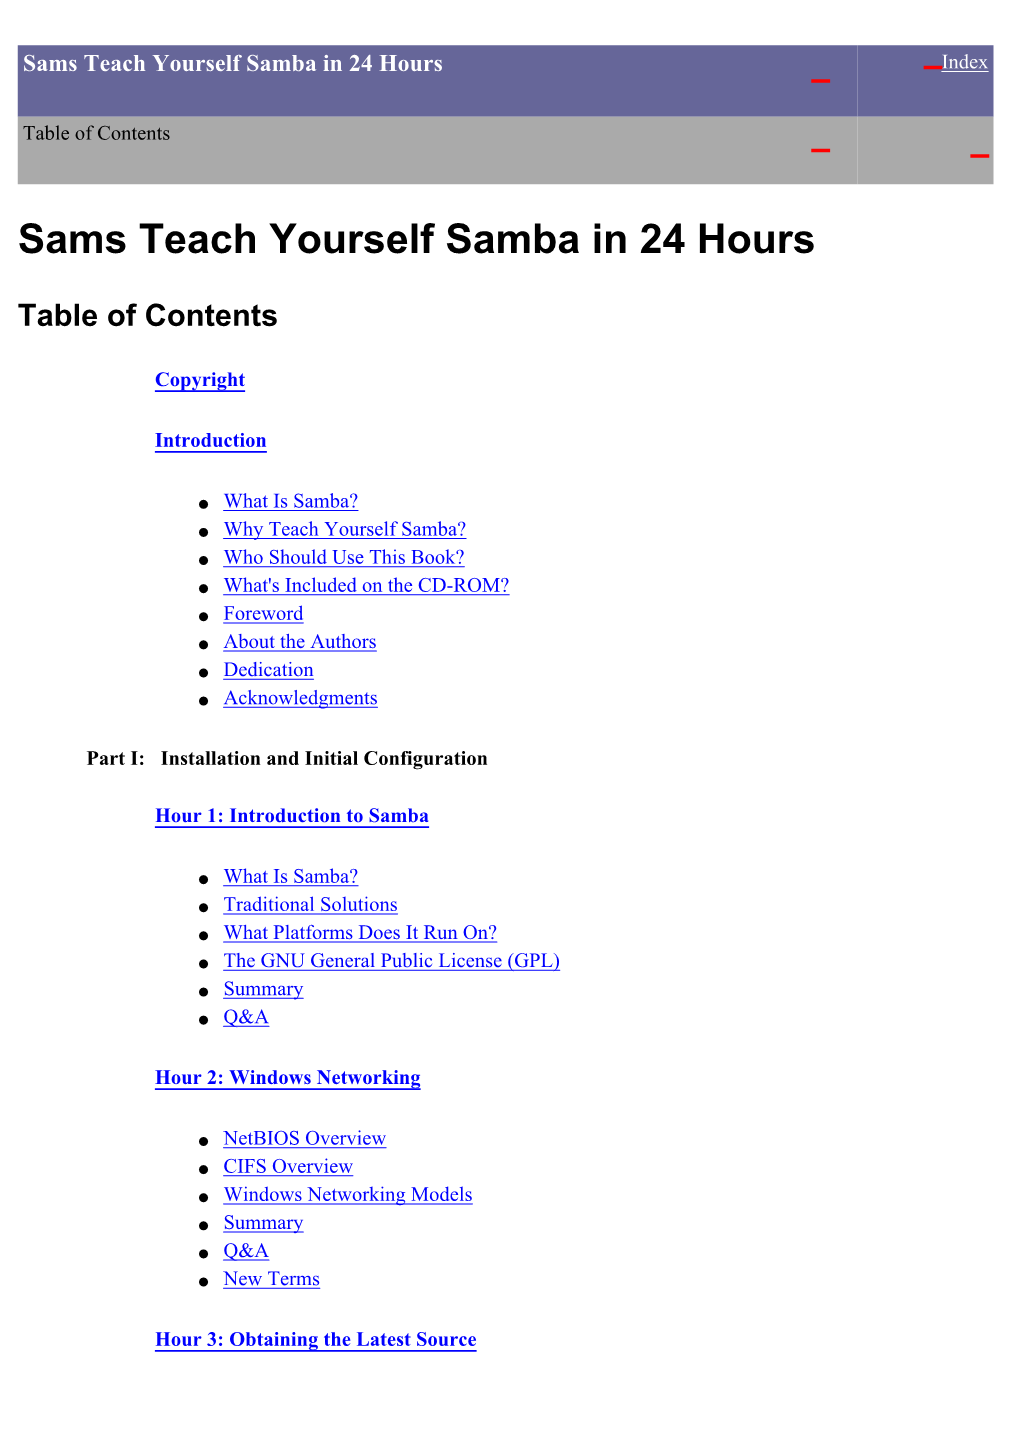 Linux Sams Teach Yourself Samba in 24 Hours.Pdf